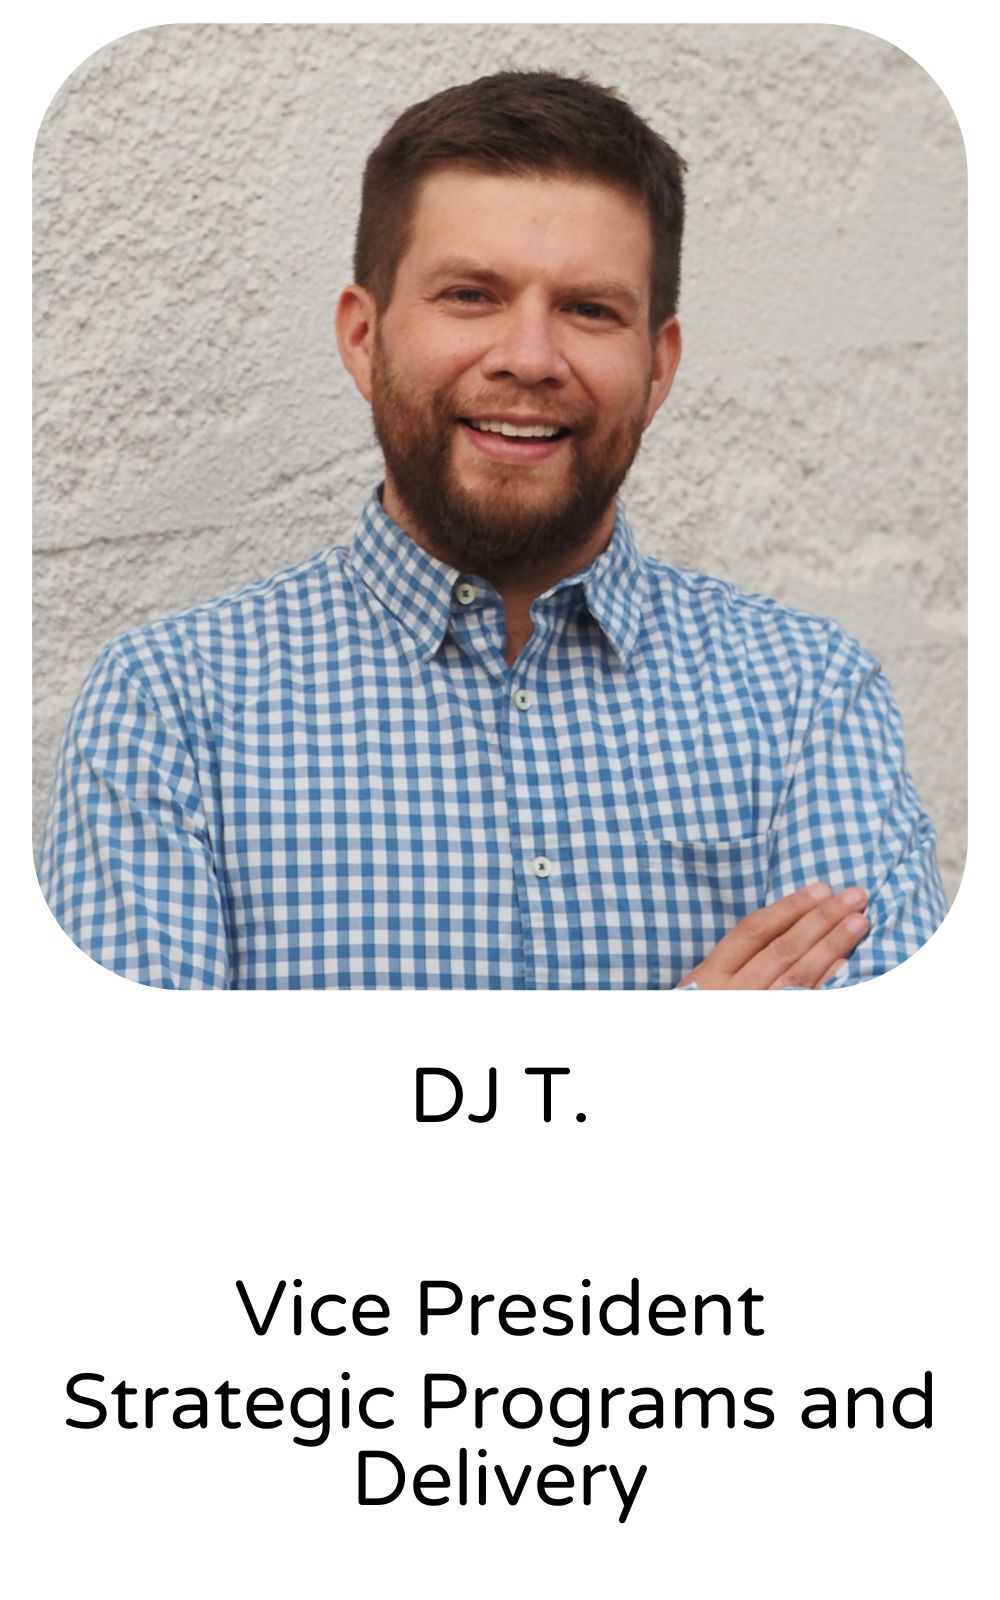 DJ T., Vice President, Strategic Programs and Delivery